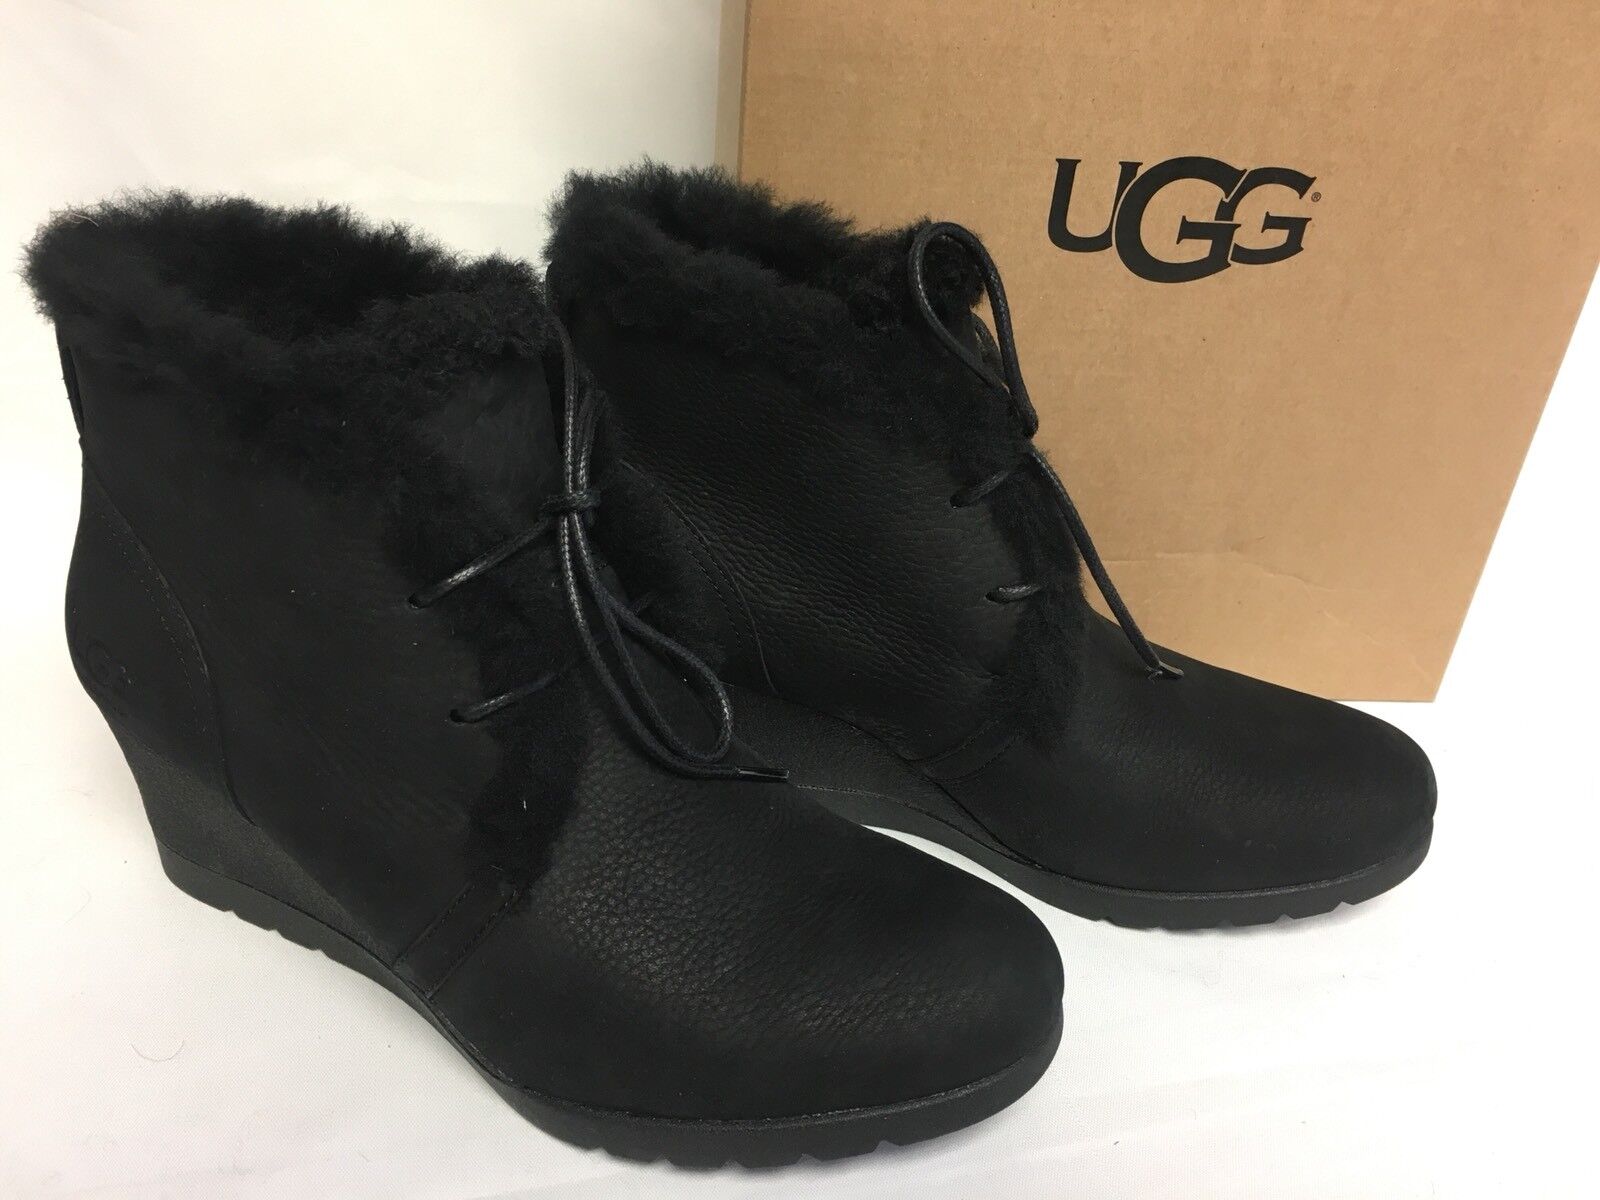 UGG Australia Jeovana Boots Black Suede Waterproof WP 1017421 Wedge Lace Up UGG Australia